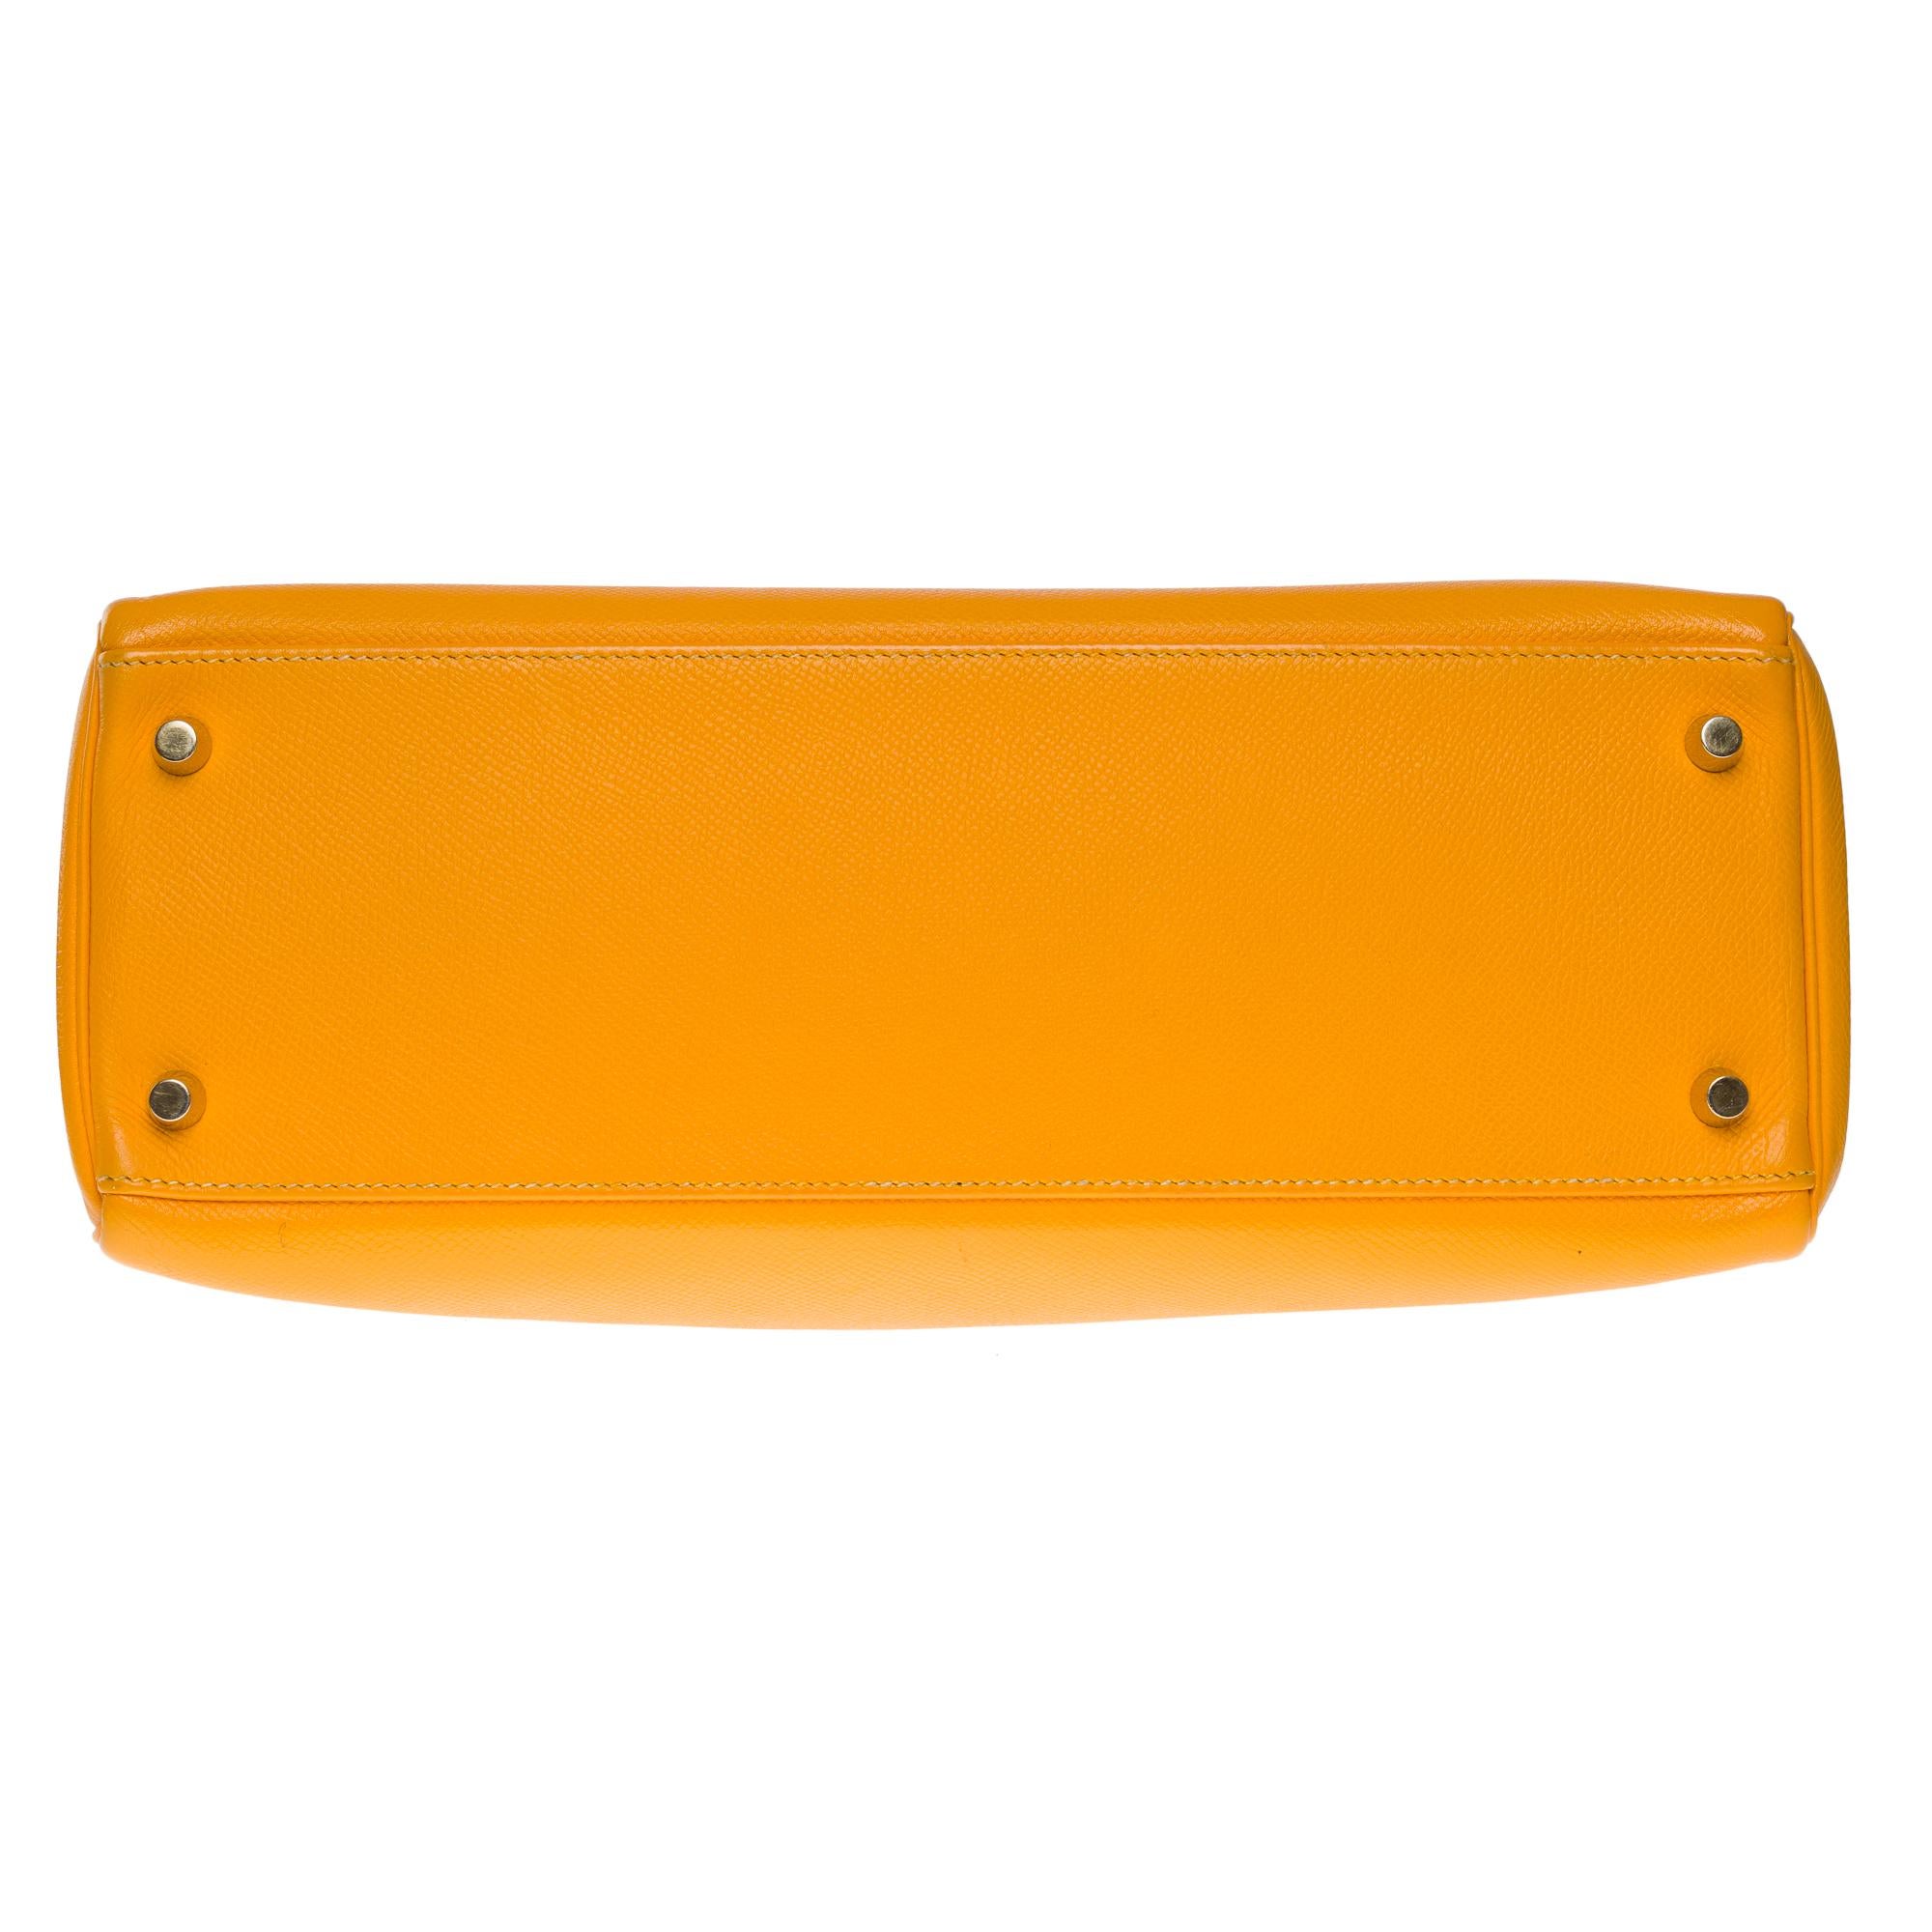 Hermès Kelly 32 retourne handbag strap in Yellow Courchevel Epsom leather, GHW 5